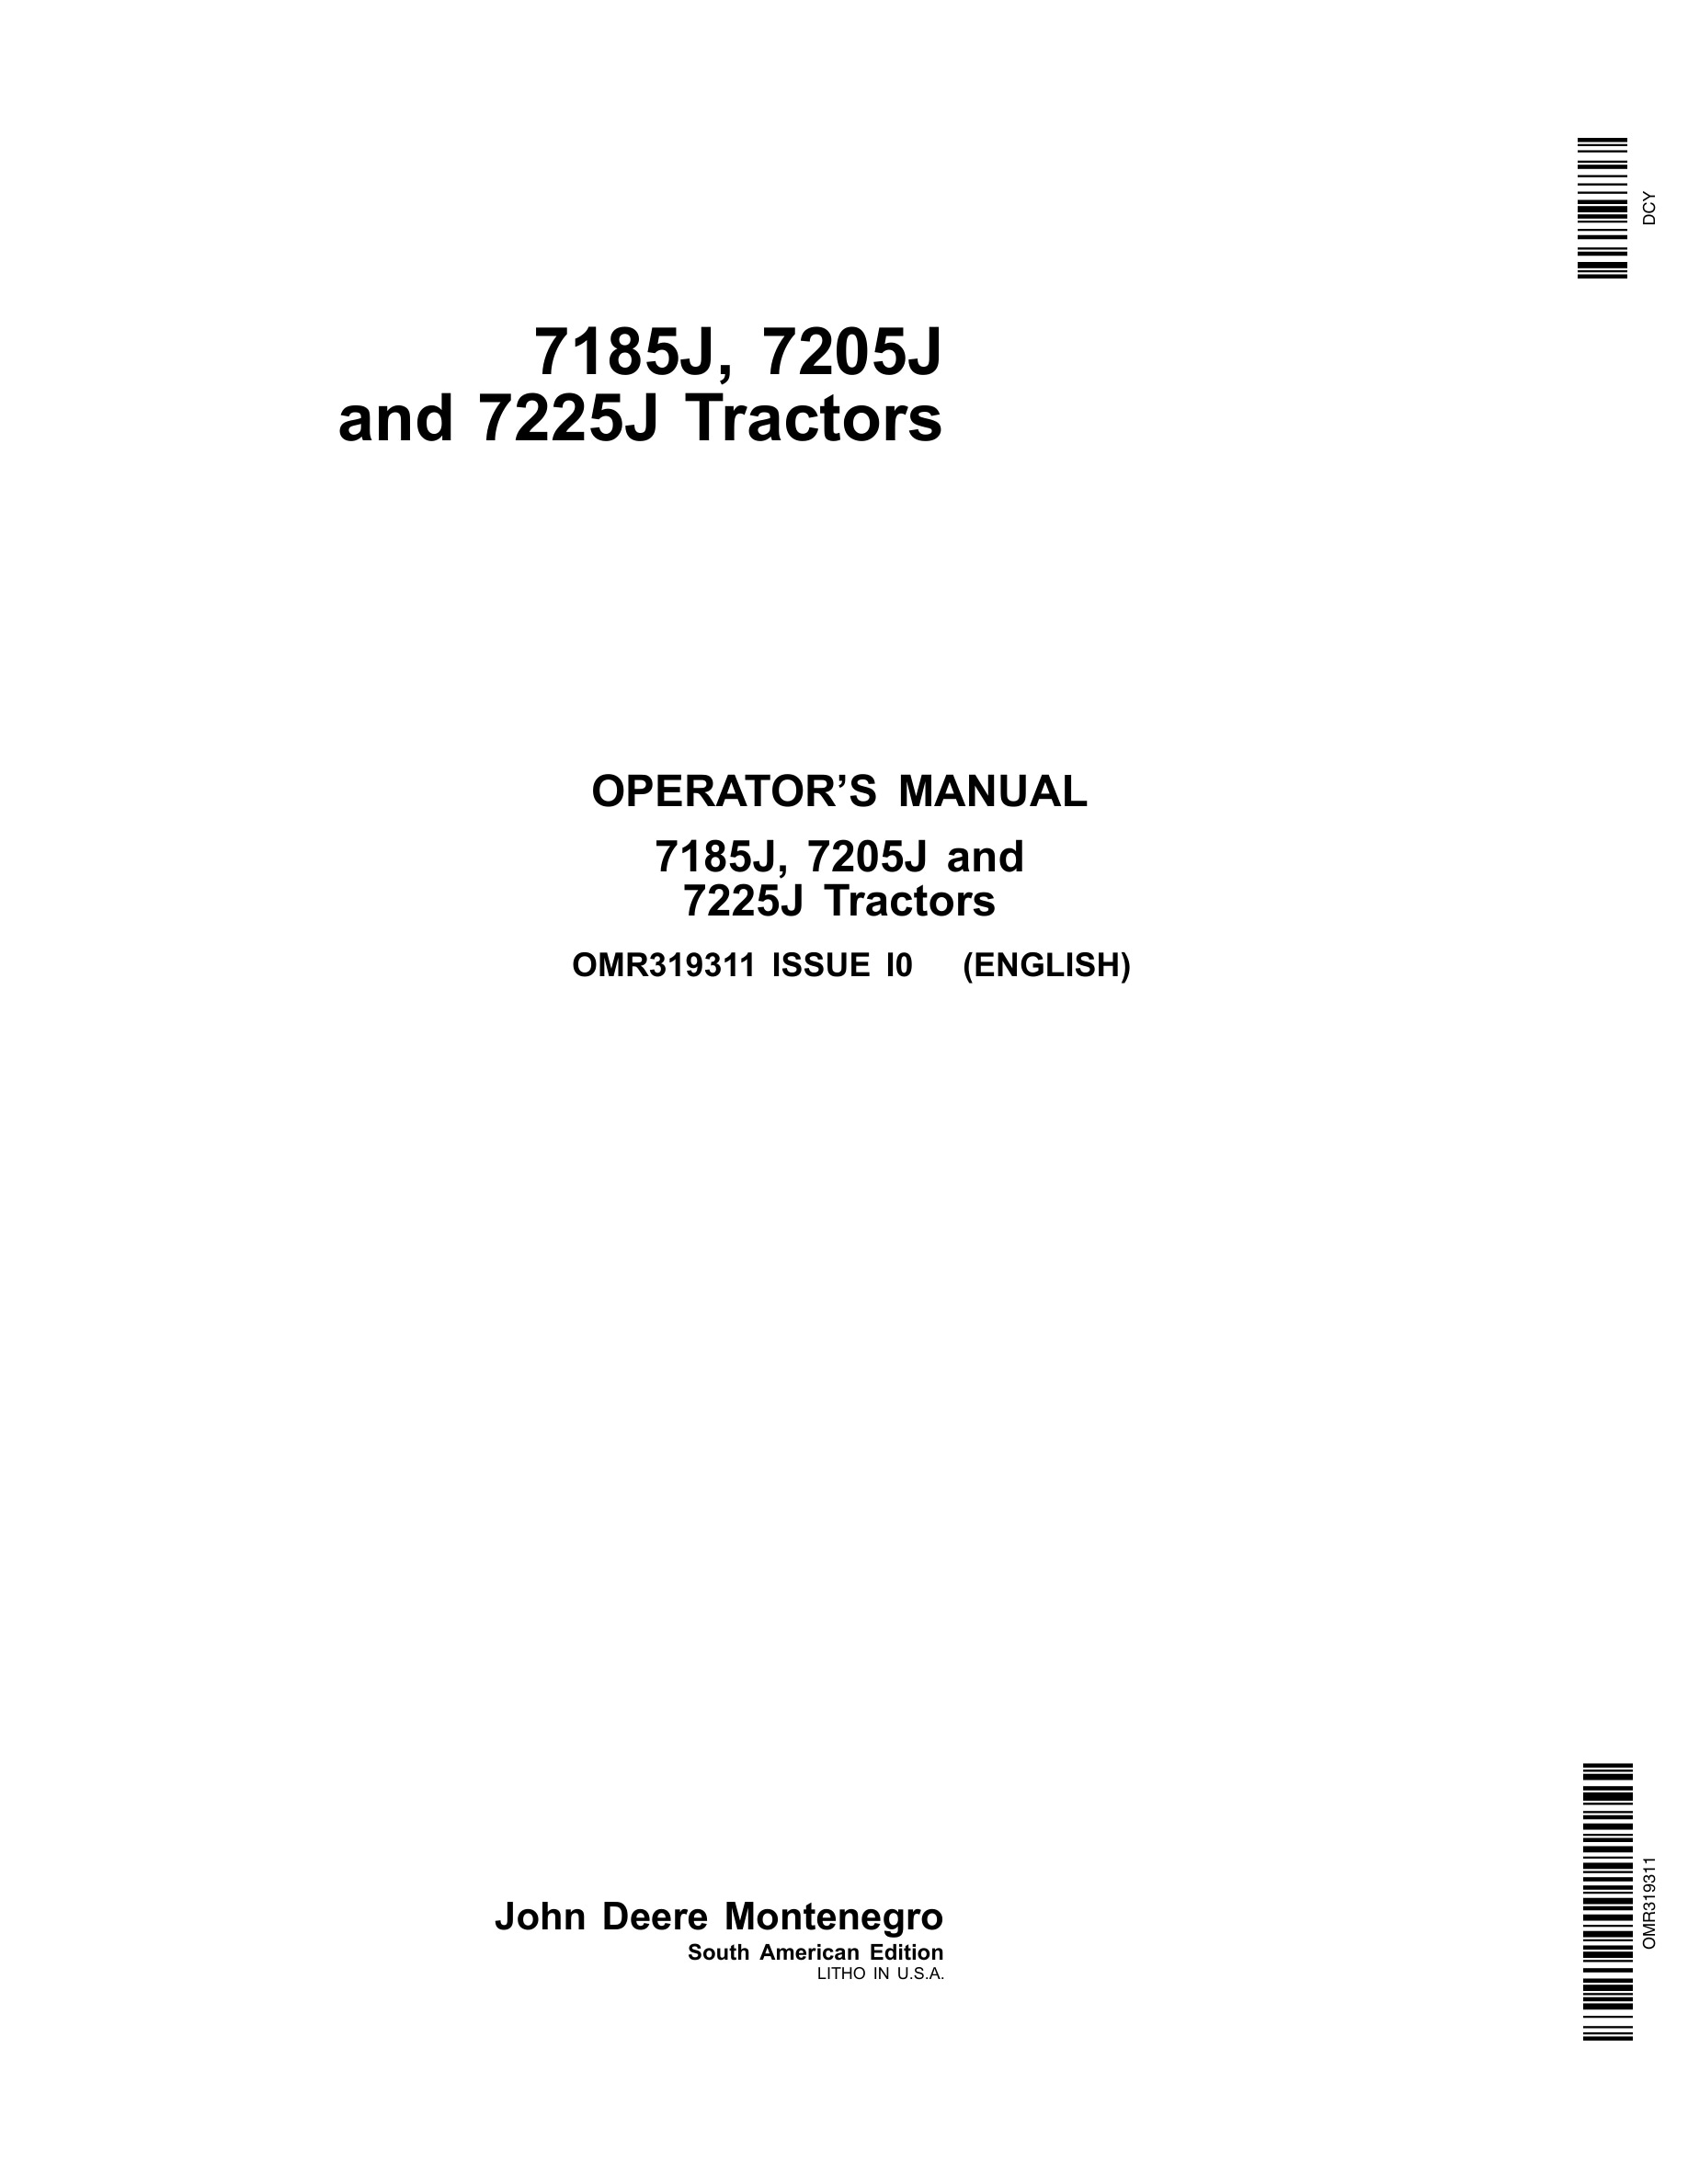 John Deere 7185j, 7205j And 7225j Tractors Operator Manuals OMR319311-1